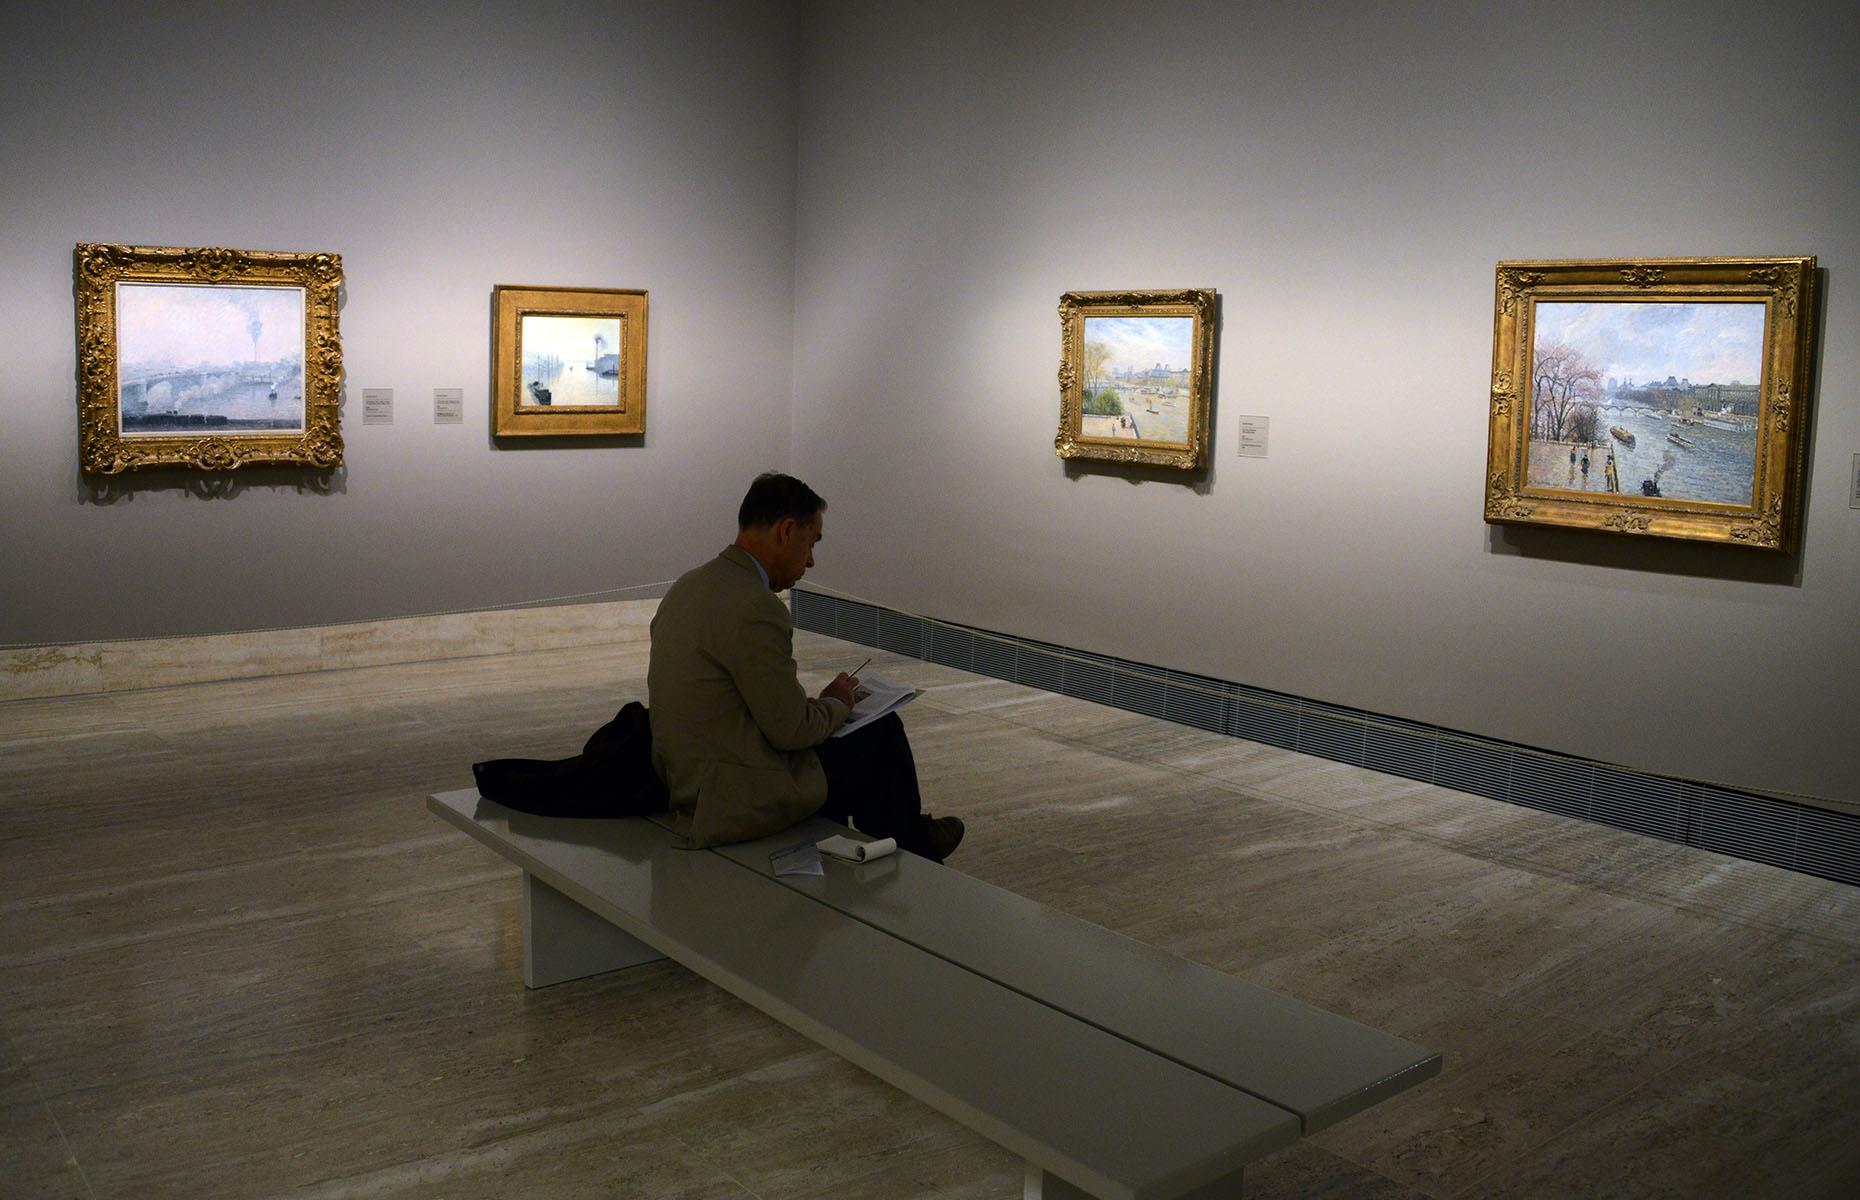 5. A Pissarro in Spain